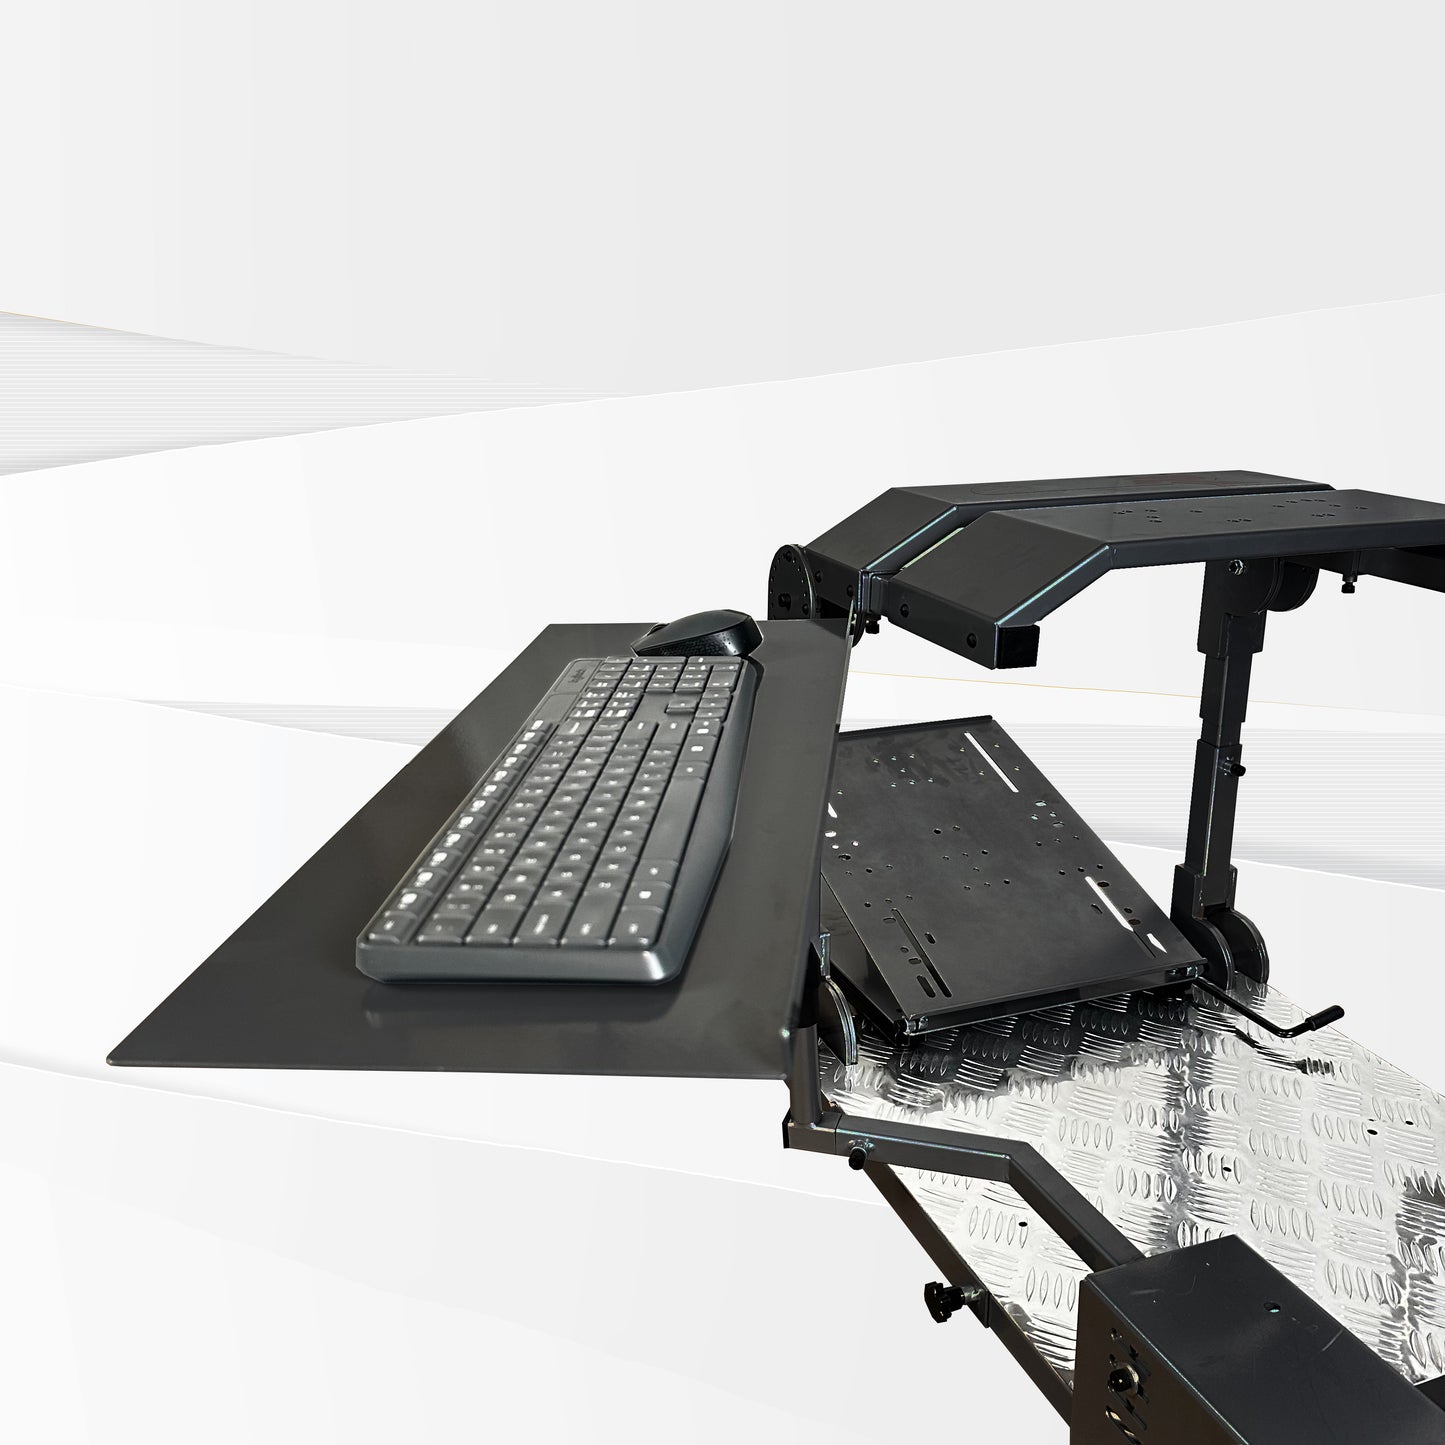 GTA-Pro Keyboard & Mouse Tray